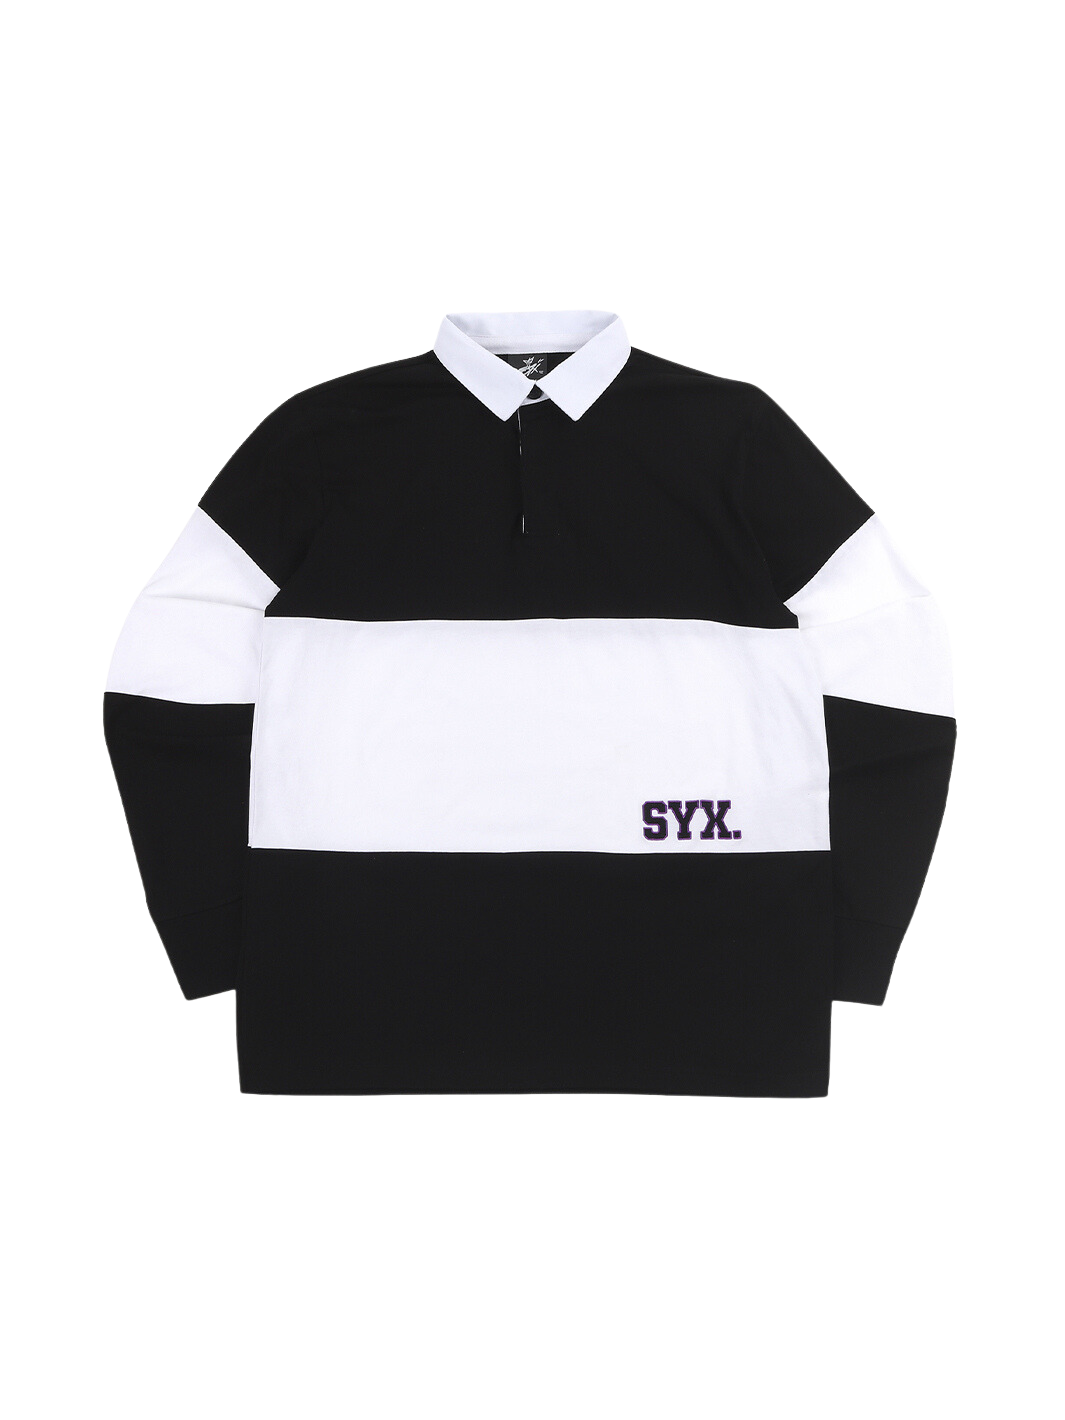 SYX B/W Rugby Shirt